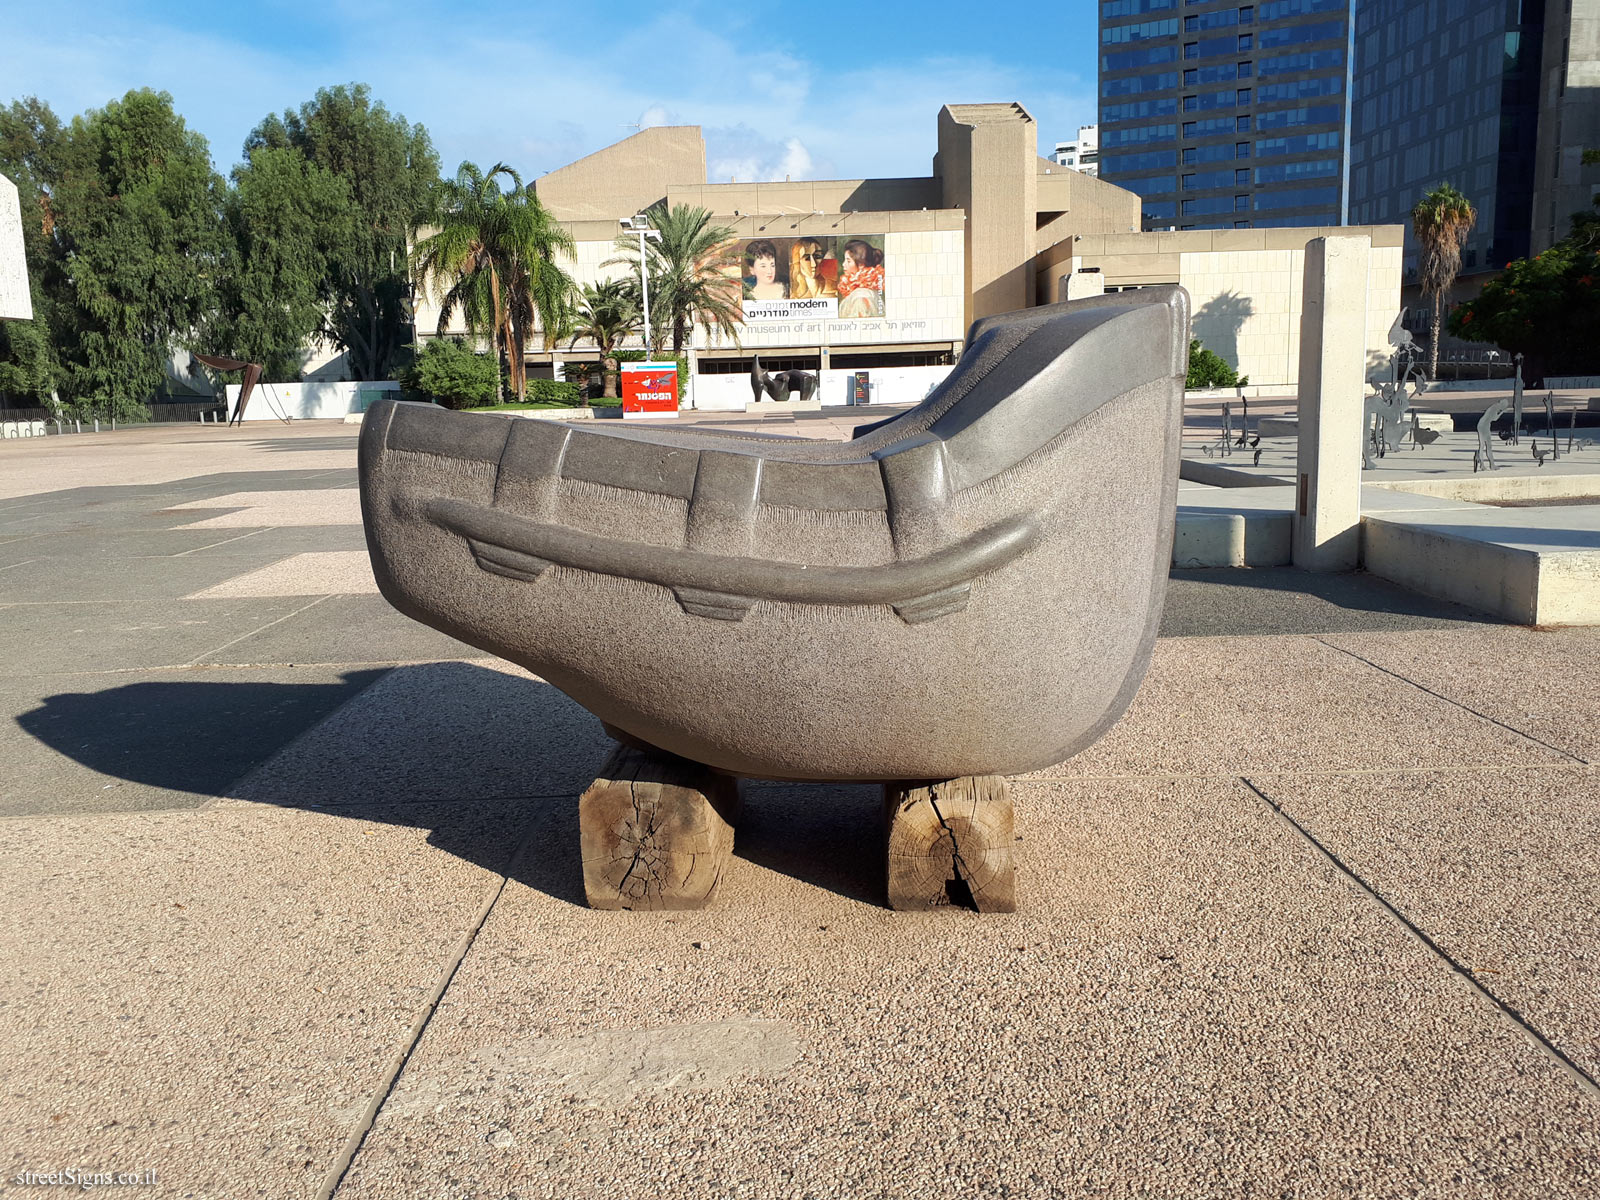 "Boat" - Outdoor sculpture by Emanuel Hatzofe - Beit Ariela Plaza, sderot king saul 27, Tel Aviv, Israel